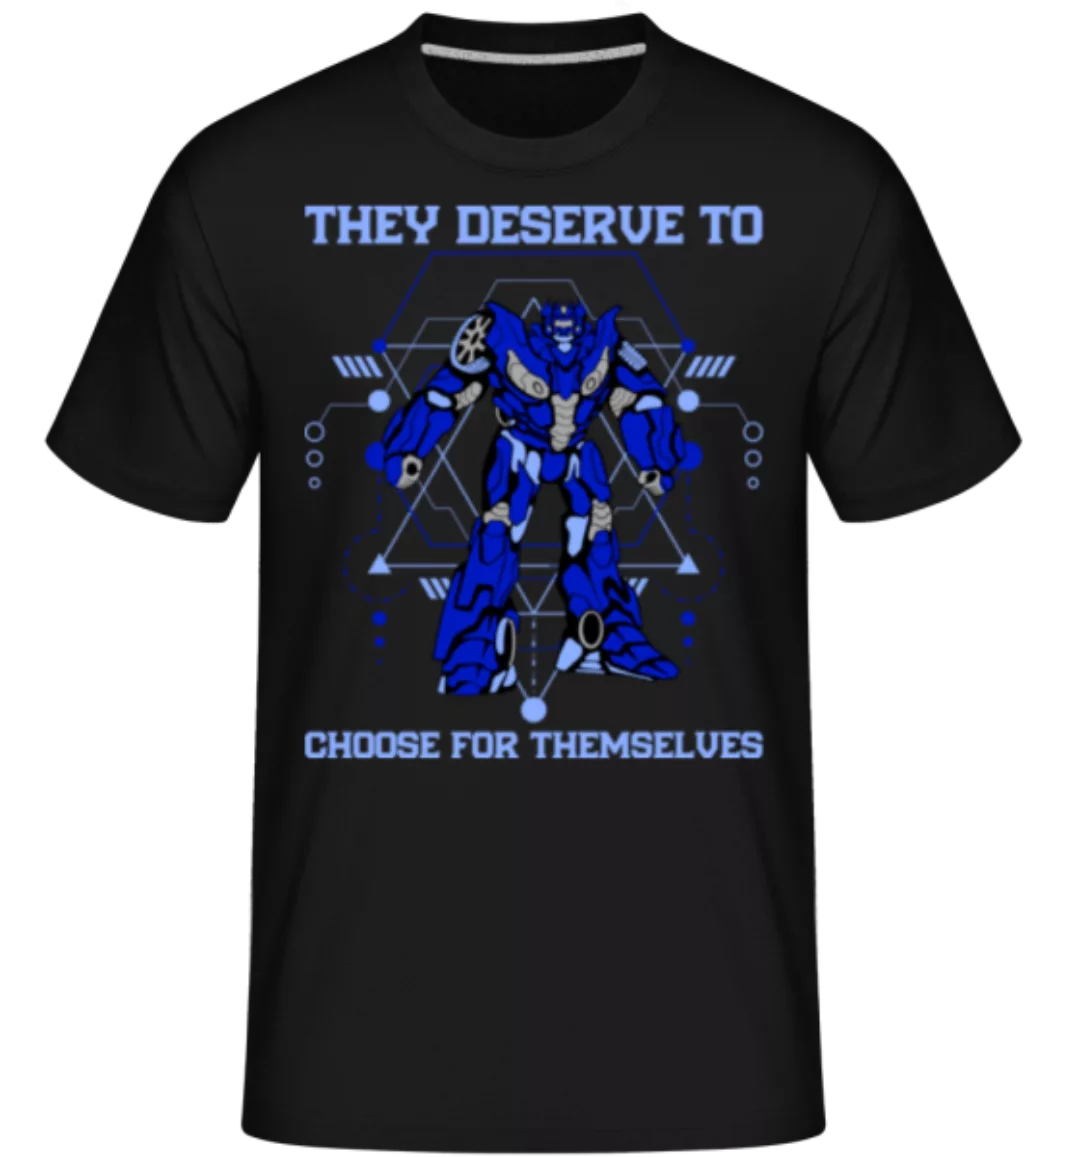 Deserve To Choose · Shirtinator Männer T-Shirt günstig online kaufen